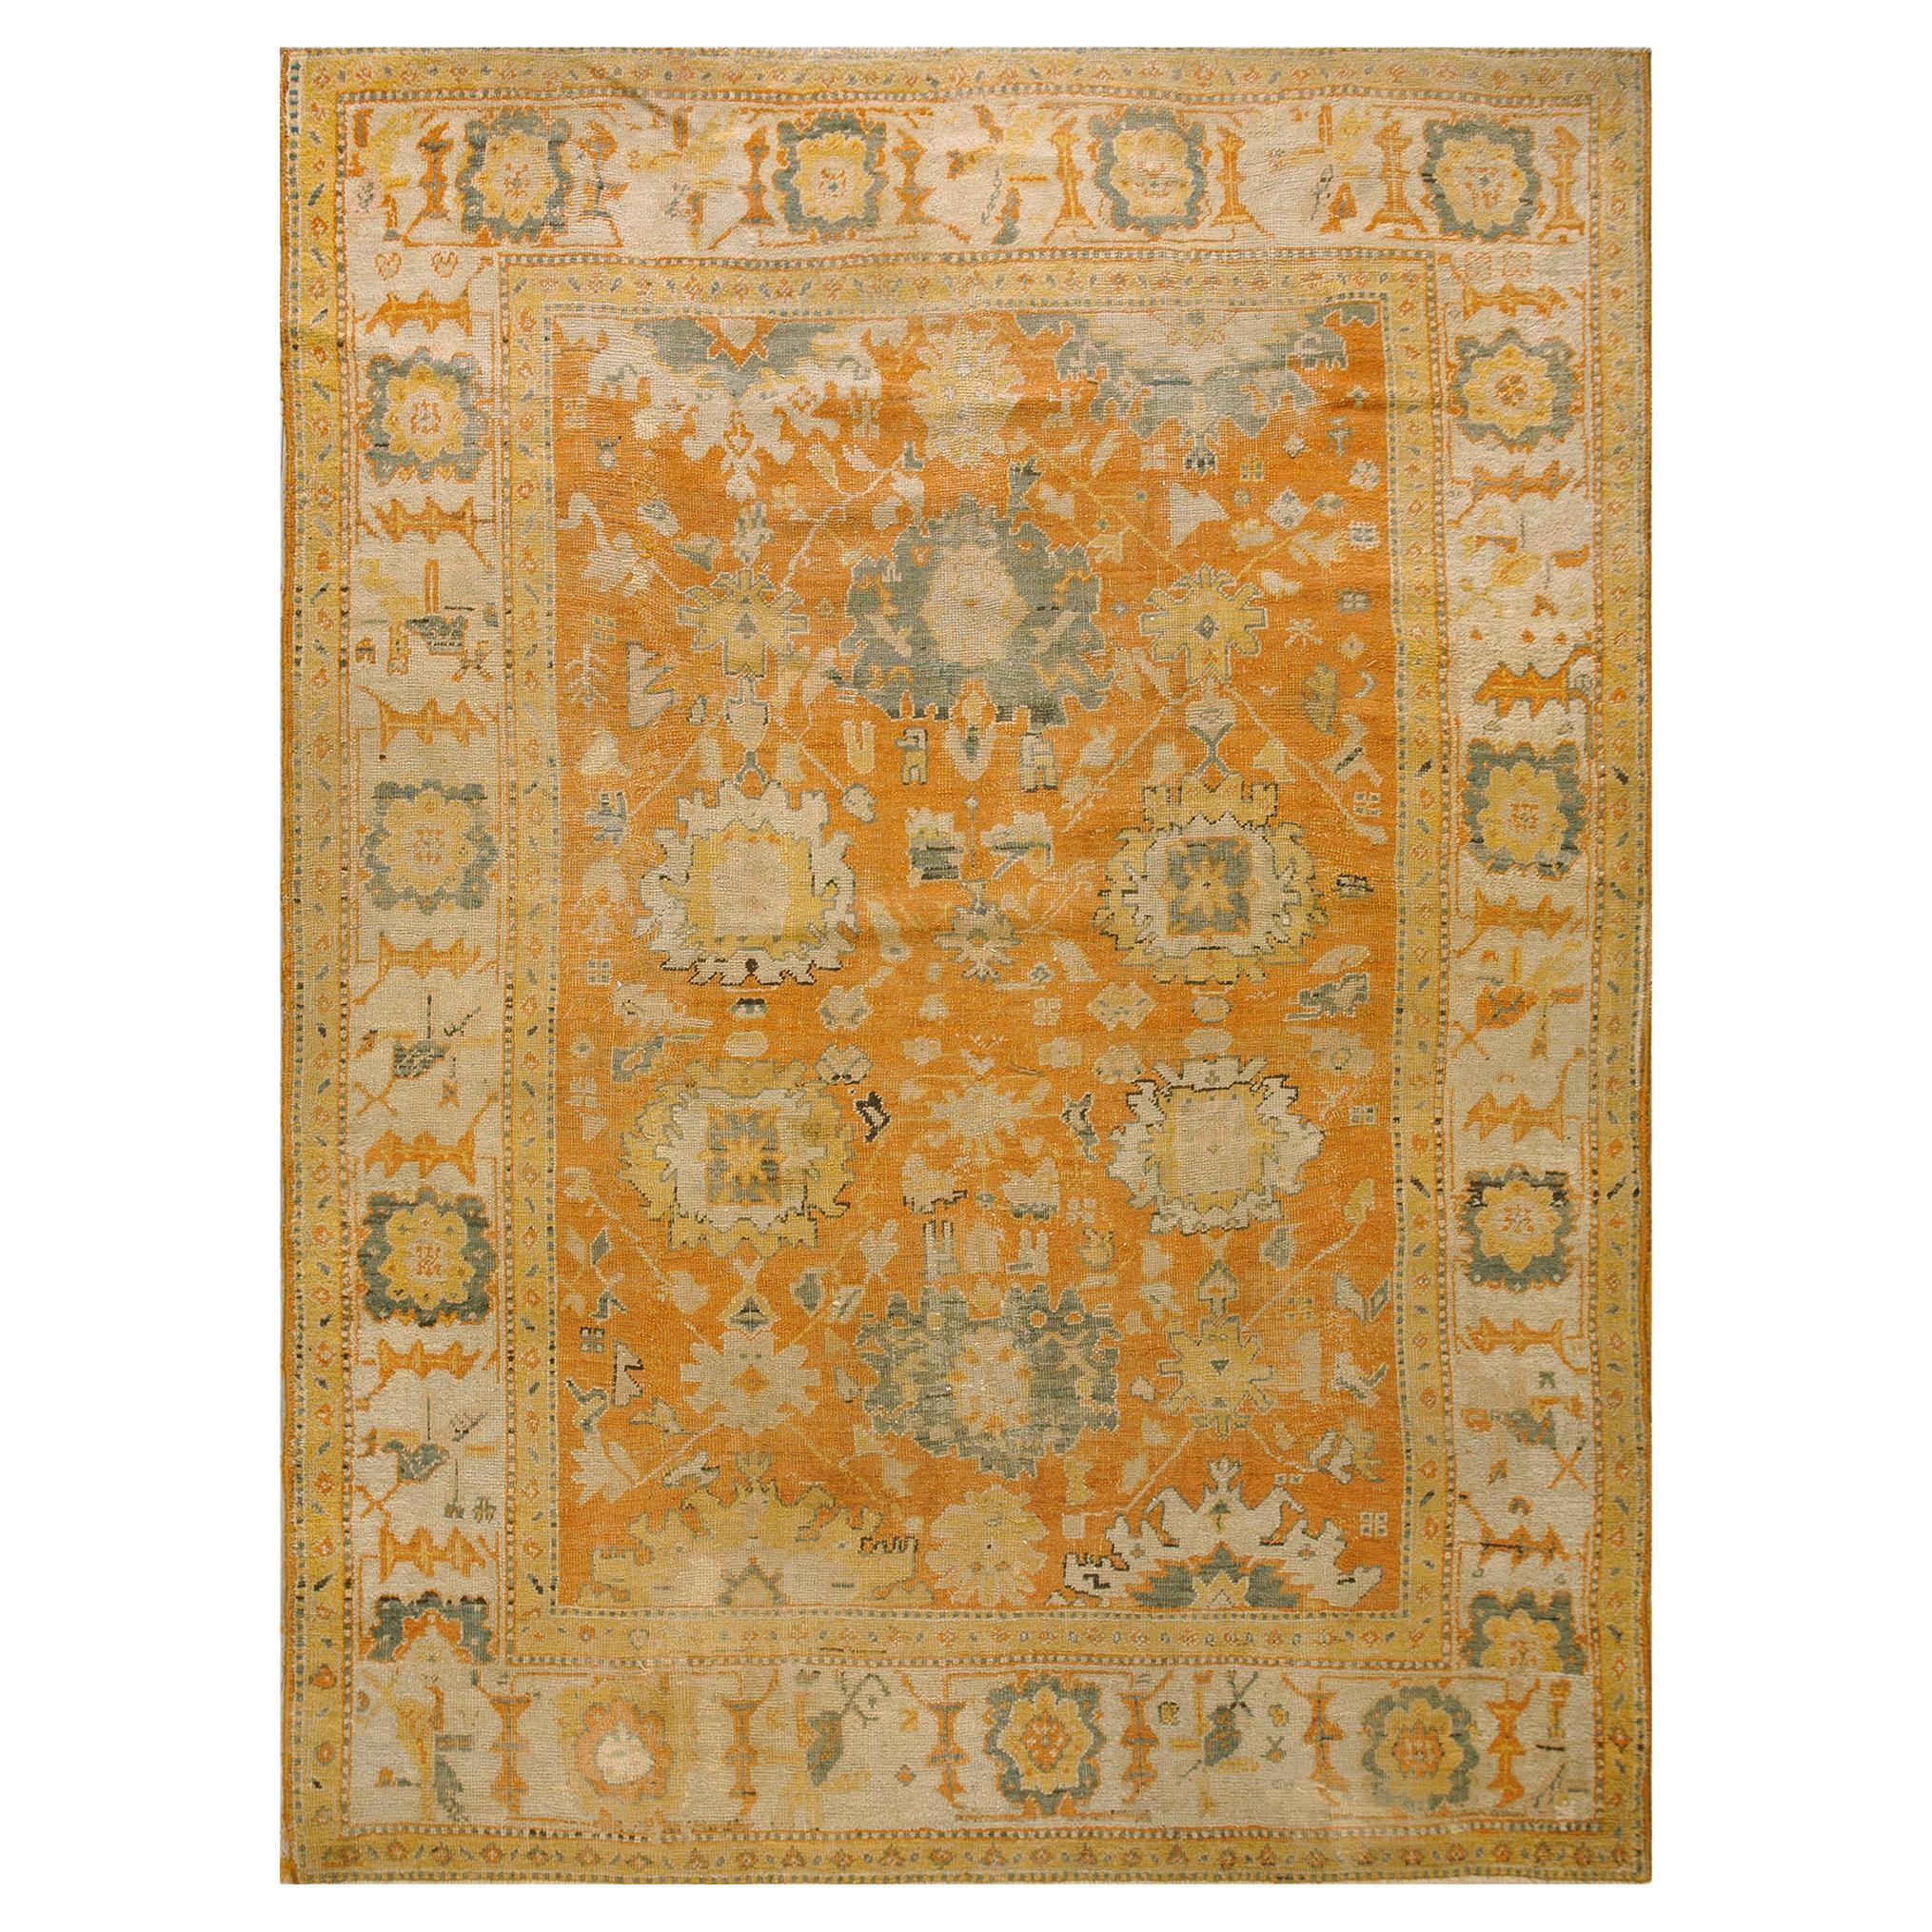 Late 19th Century Turkish Oushak Carpet ( 8'4''x 11'2'' - 254 x 340 )